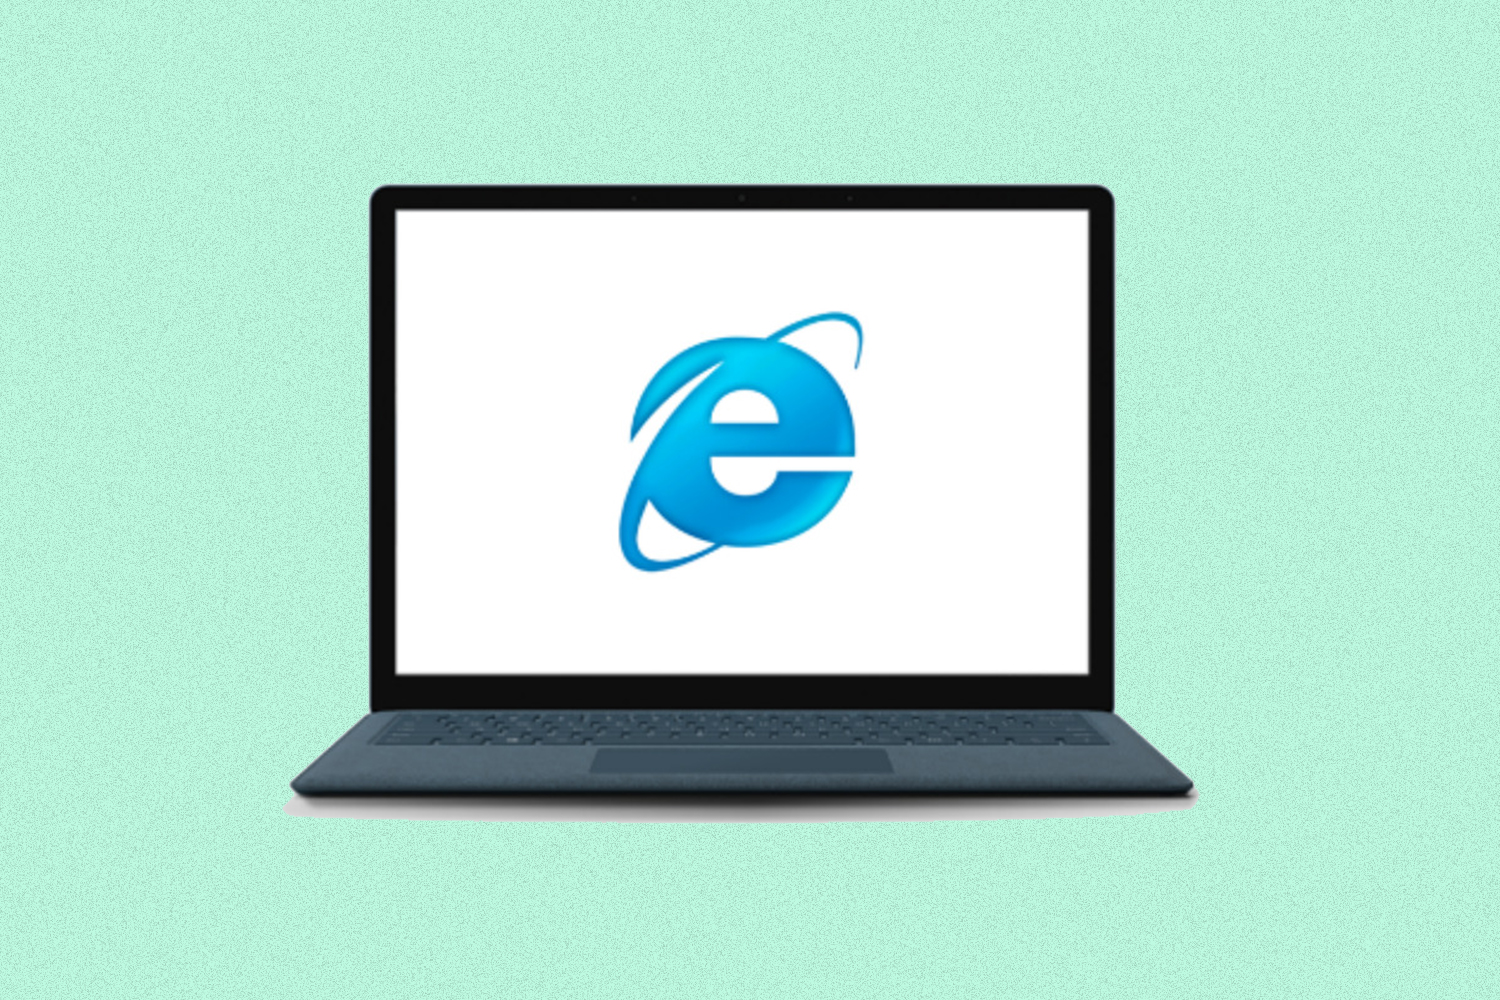 Internet Explorer browser logo on a laptop computer